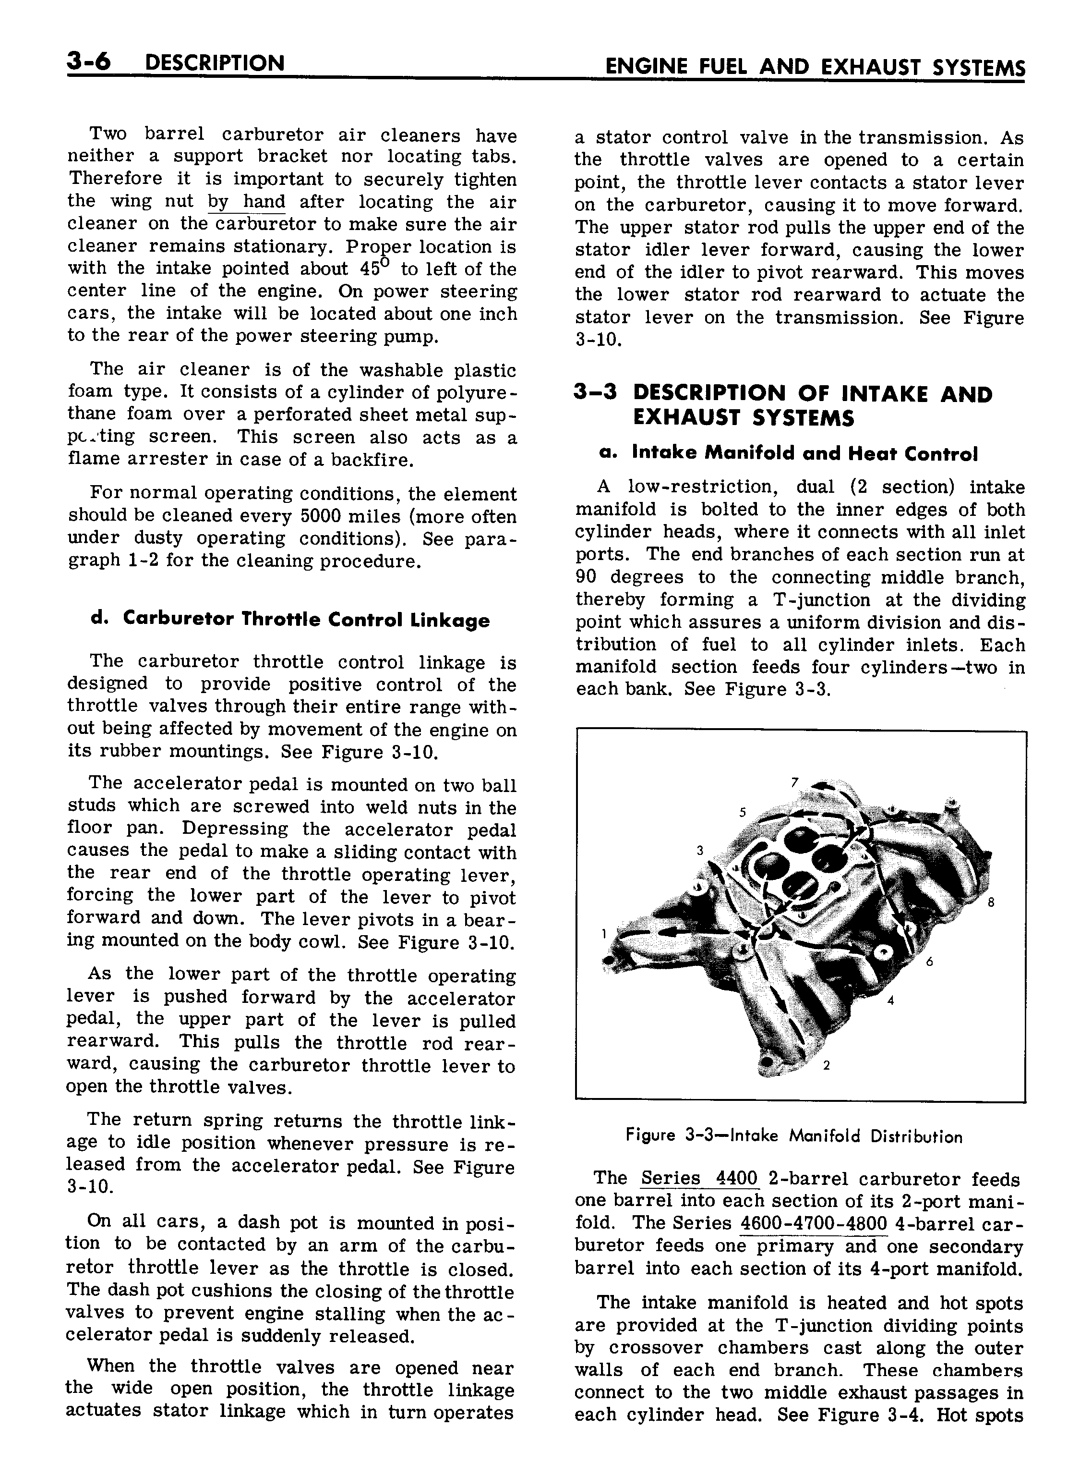 n_04 1961 Buick Shop Manual - Engine Fuel & Exhaust-006-006.jpg